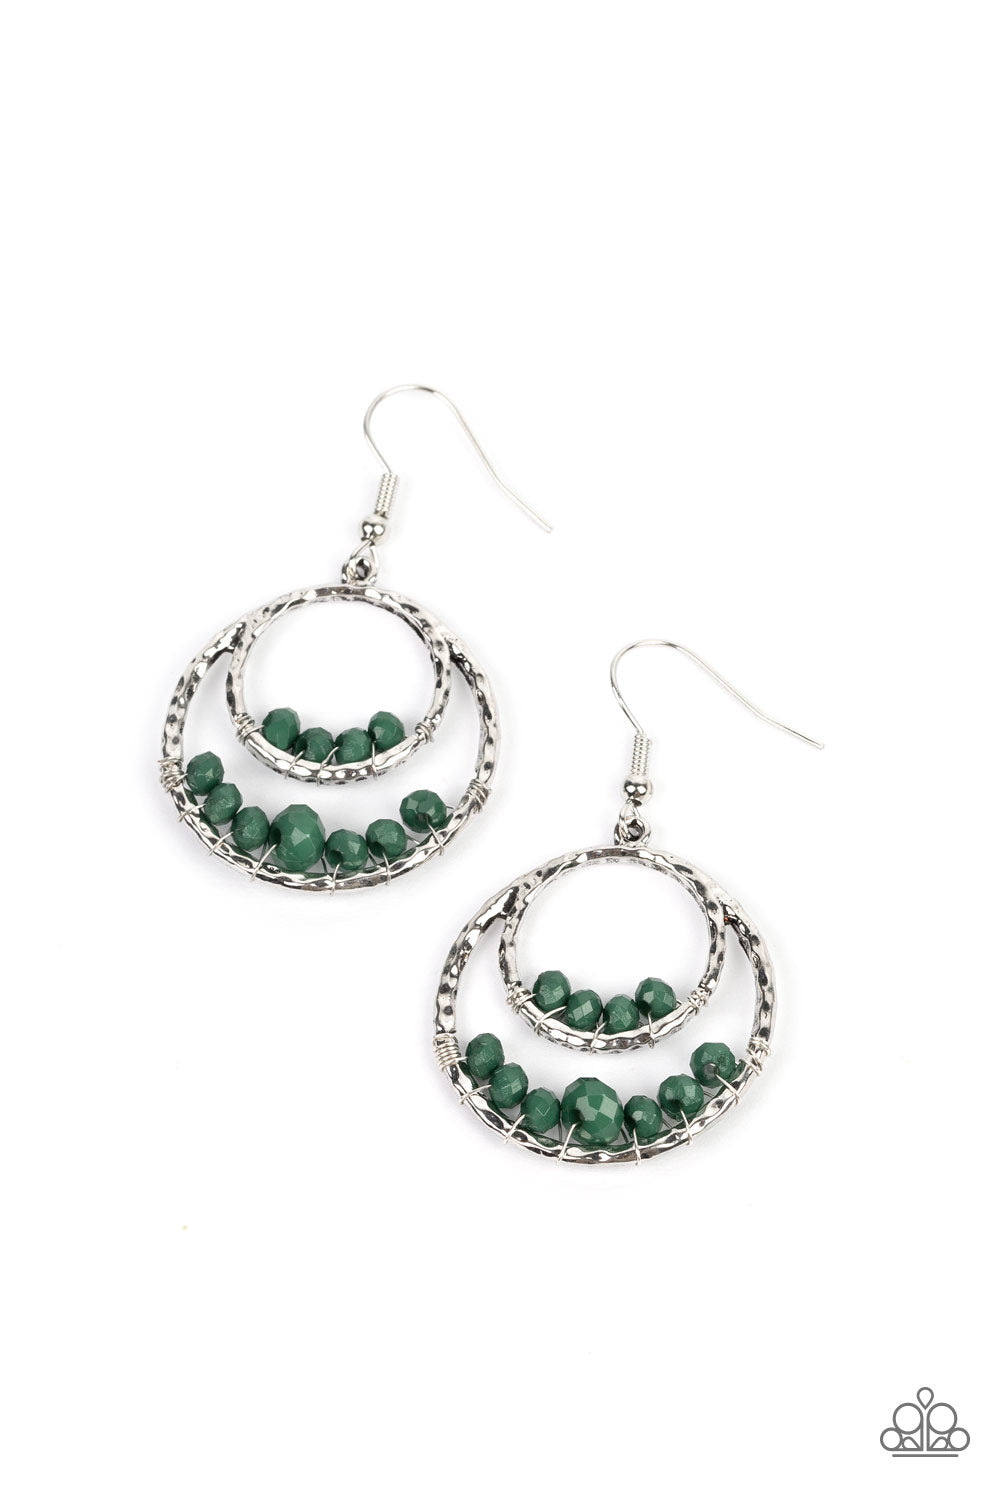 Paparazzi - Bustling Beads - Green Earring